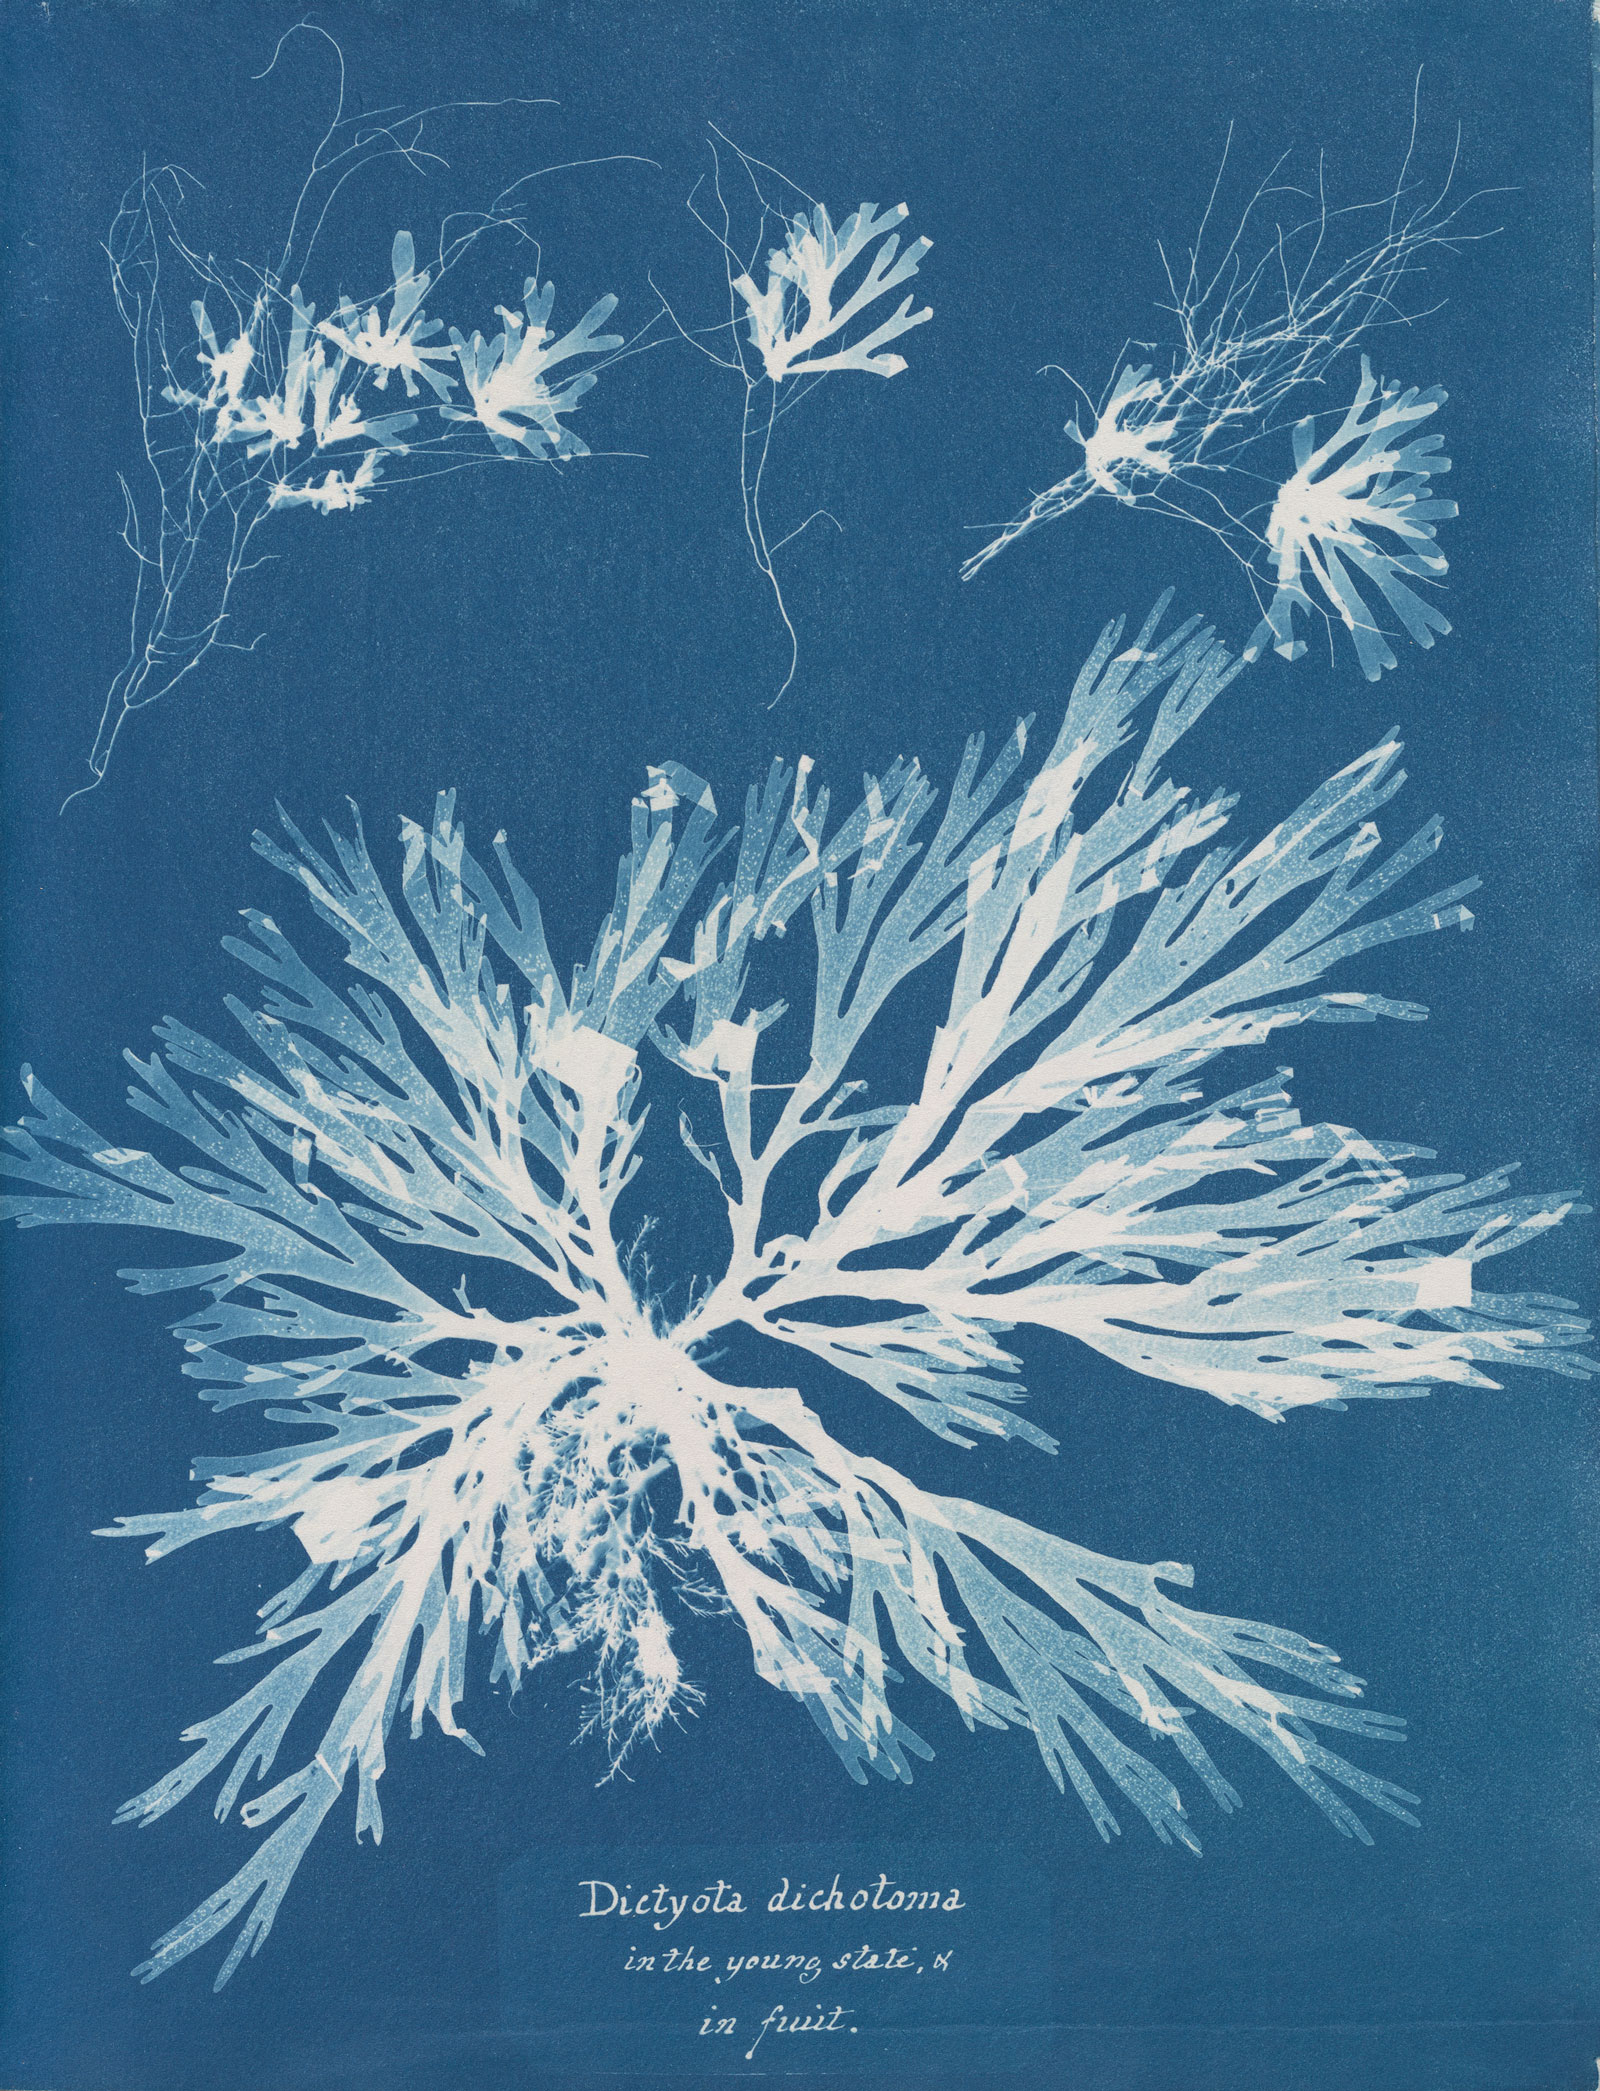 Anna Atkins’s Blue Photographs